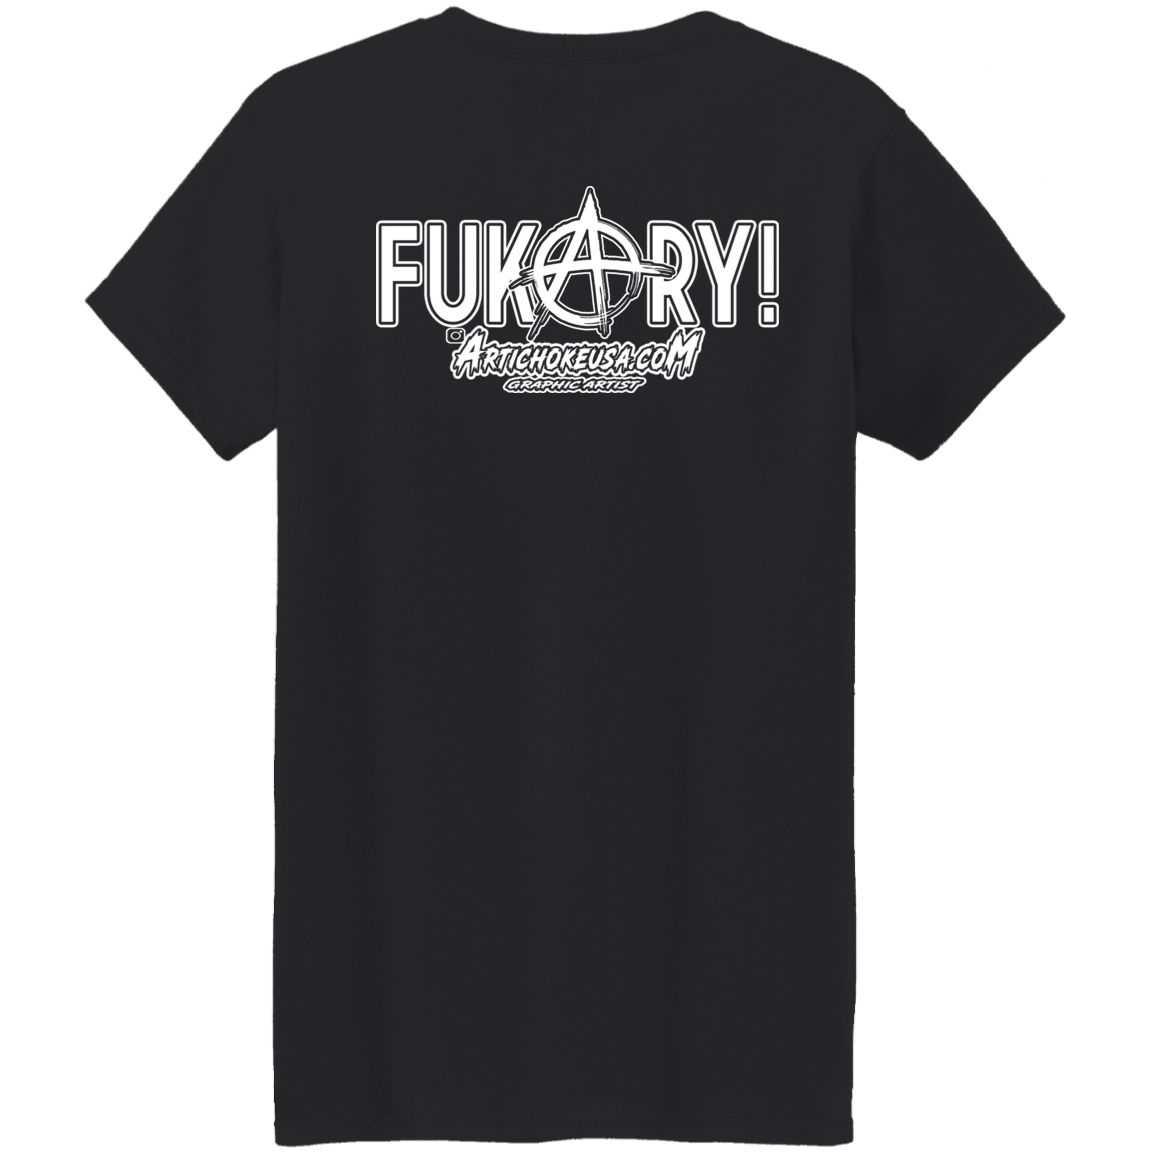 ArtichokeUSA Custom Design. FUKCERY. The New Bullshit. Ladies' 5.3 oz. T-Shirt